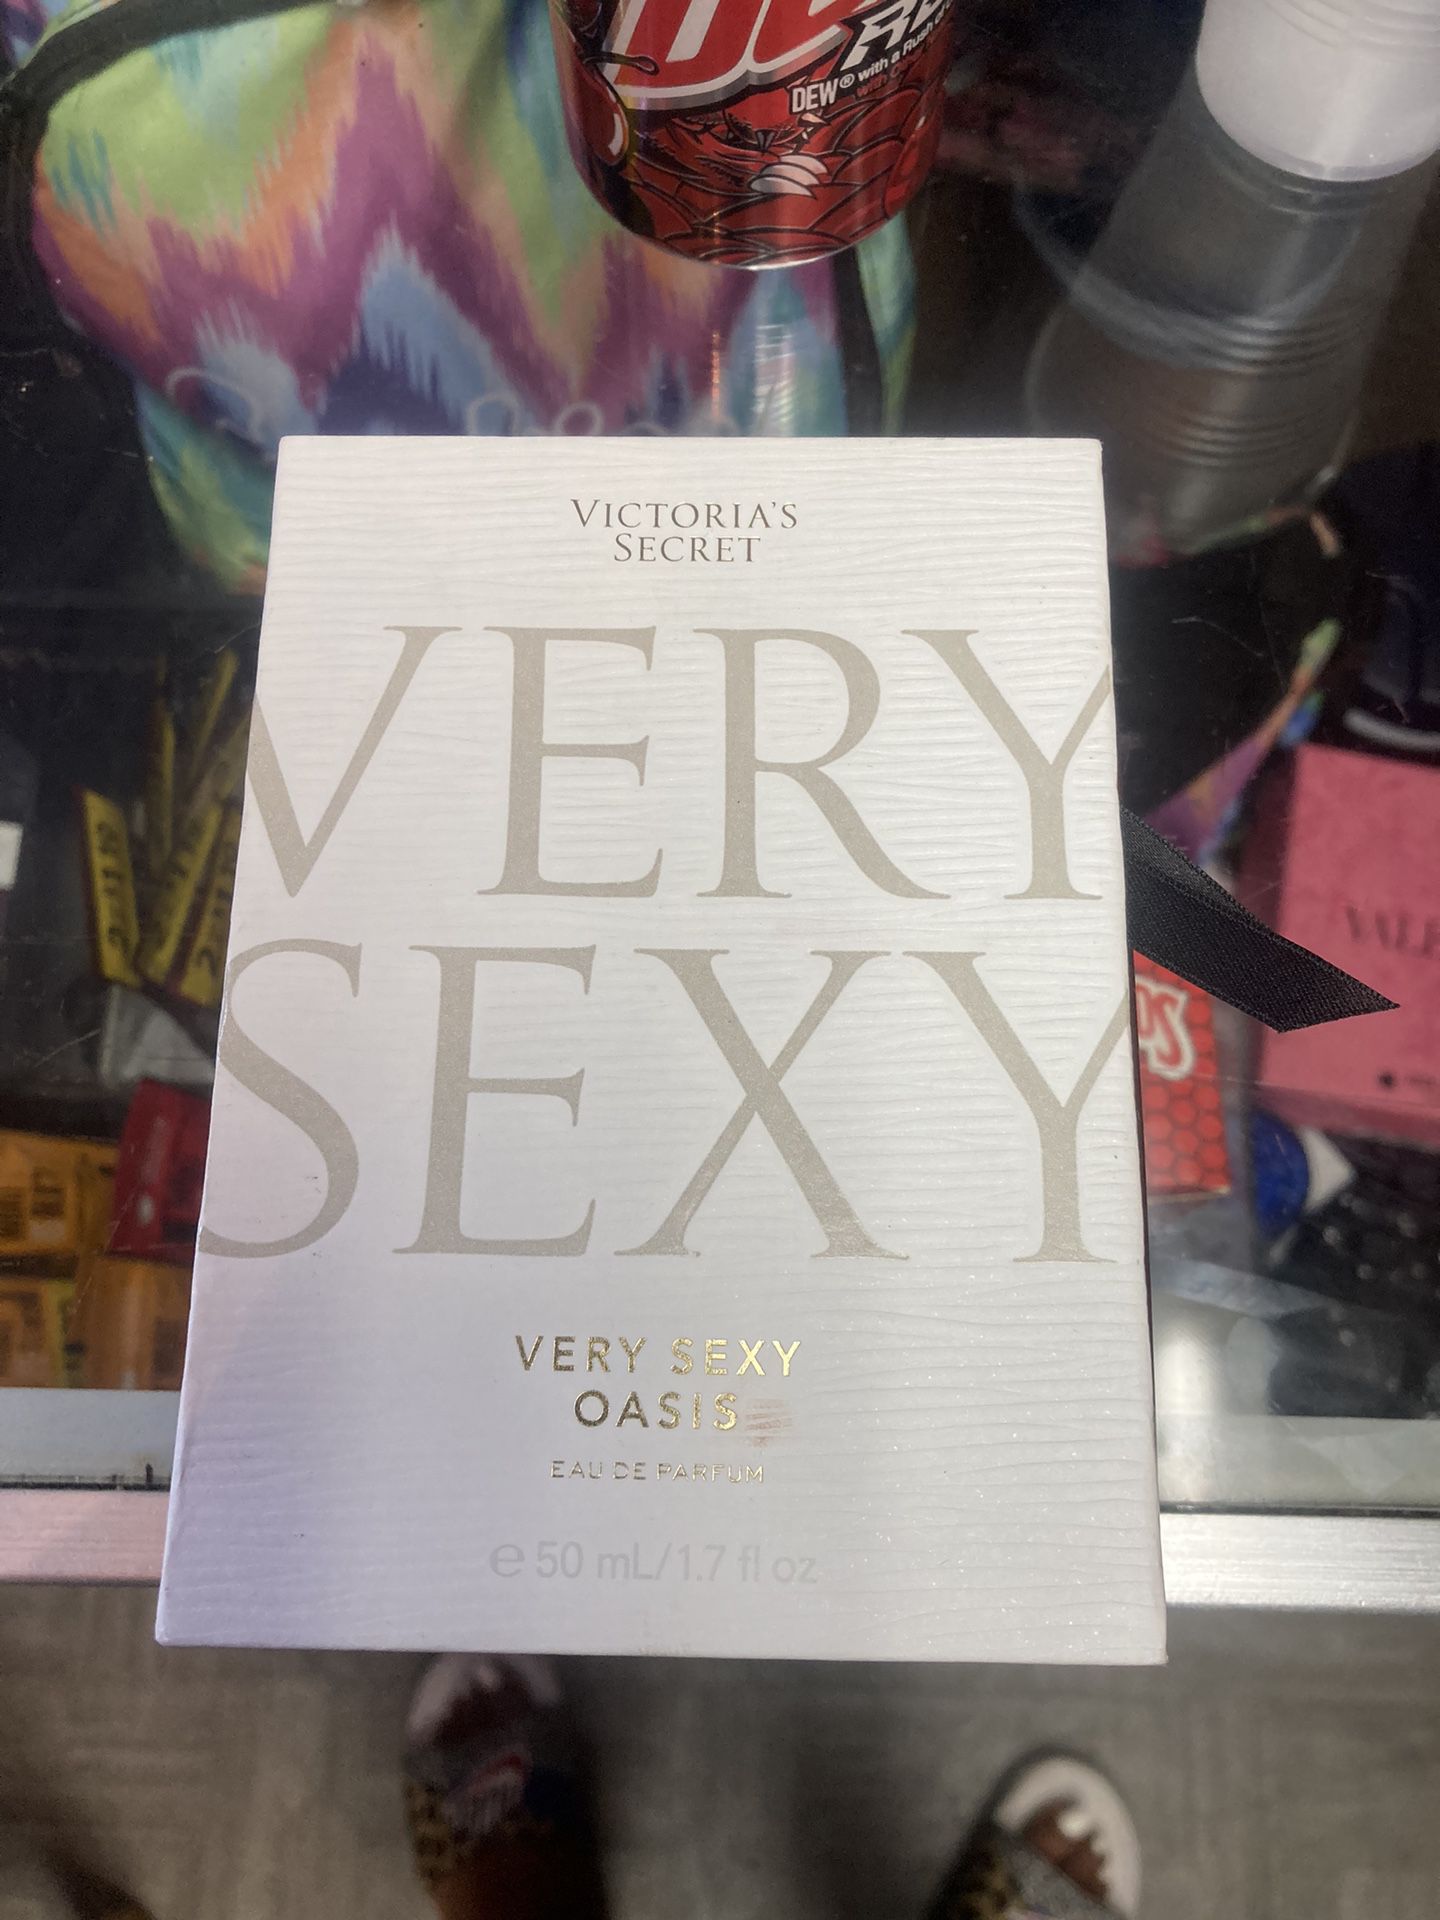 Victoria Secret Perfume